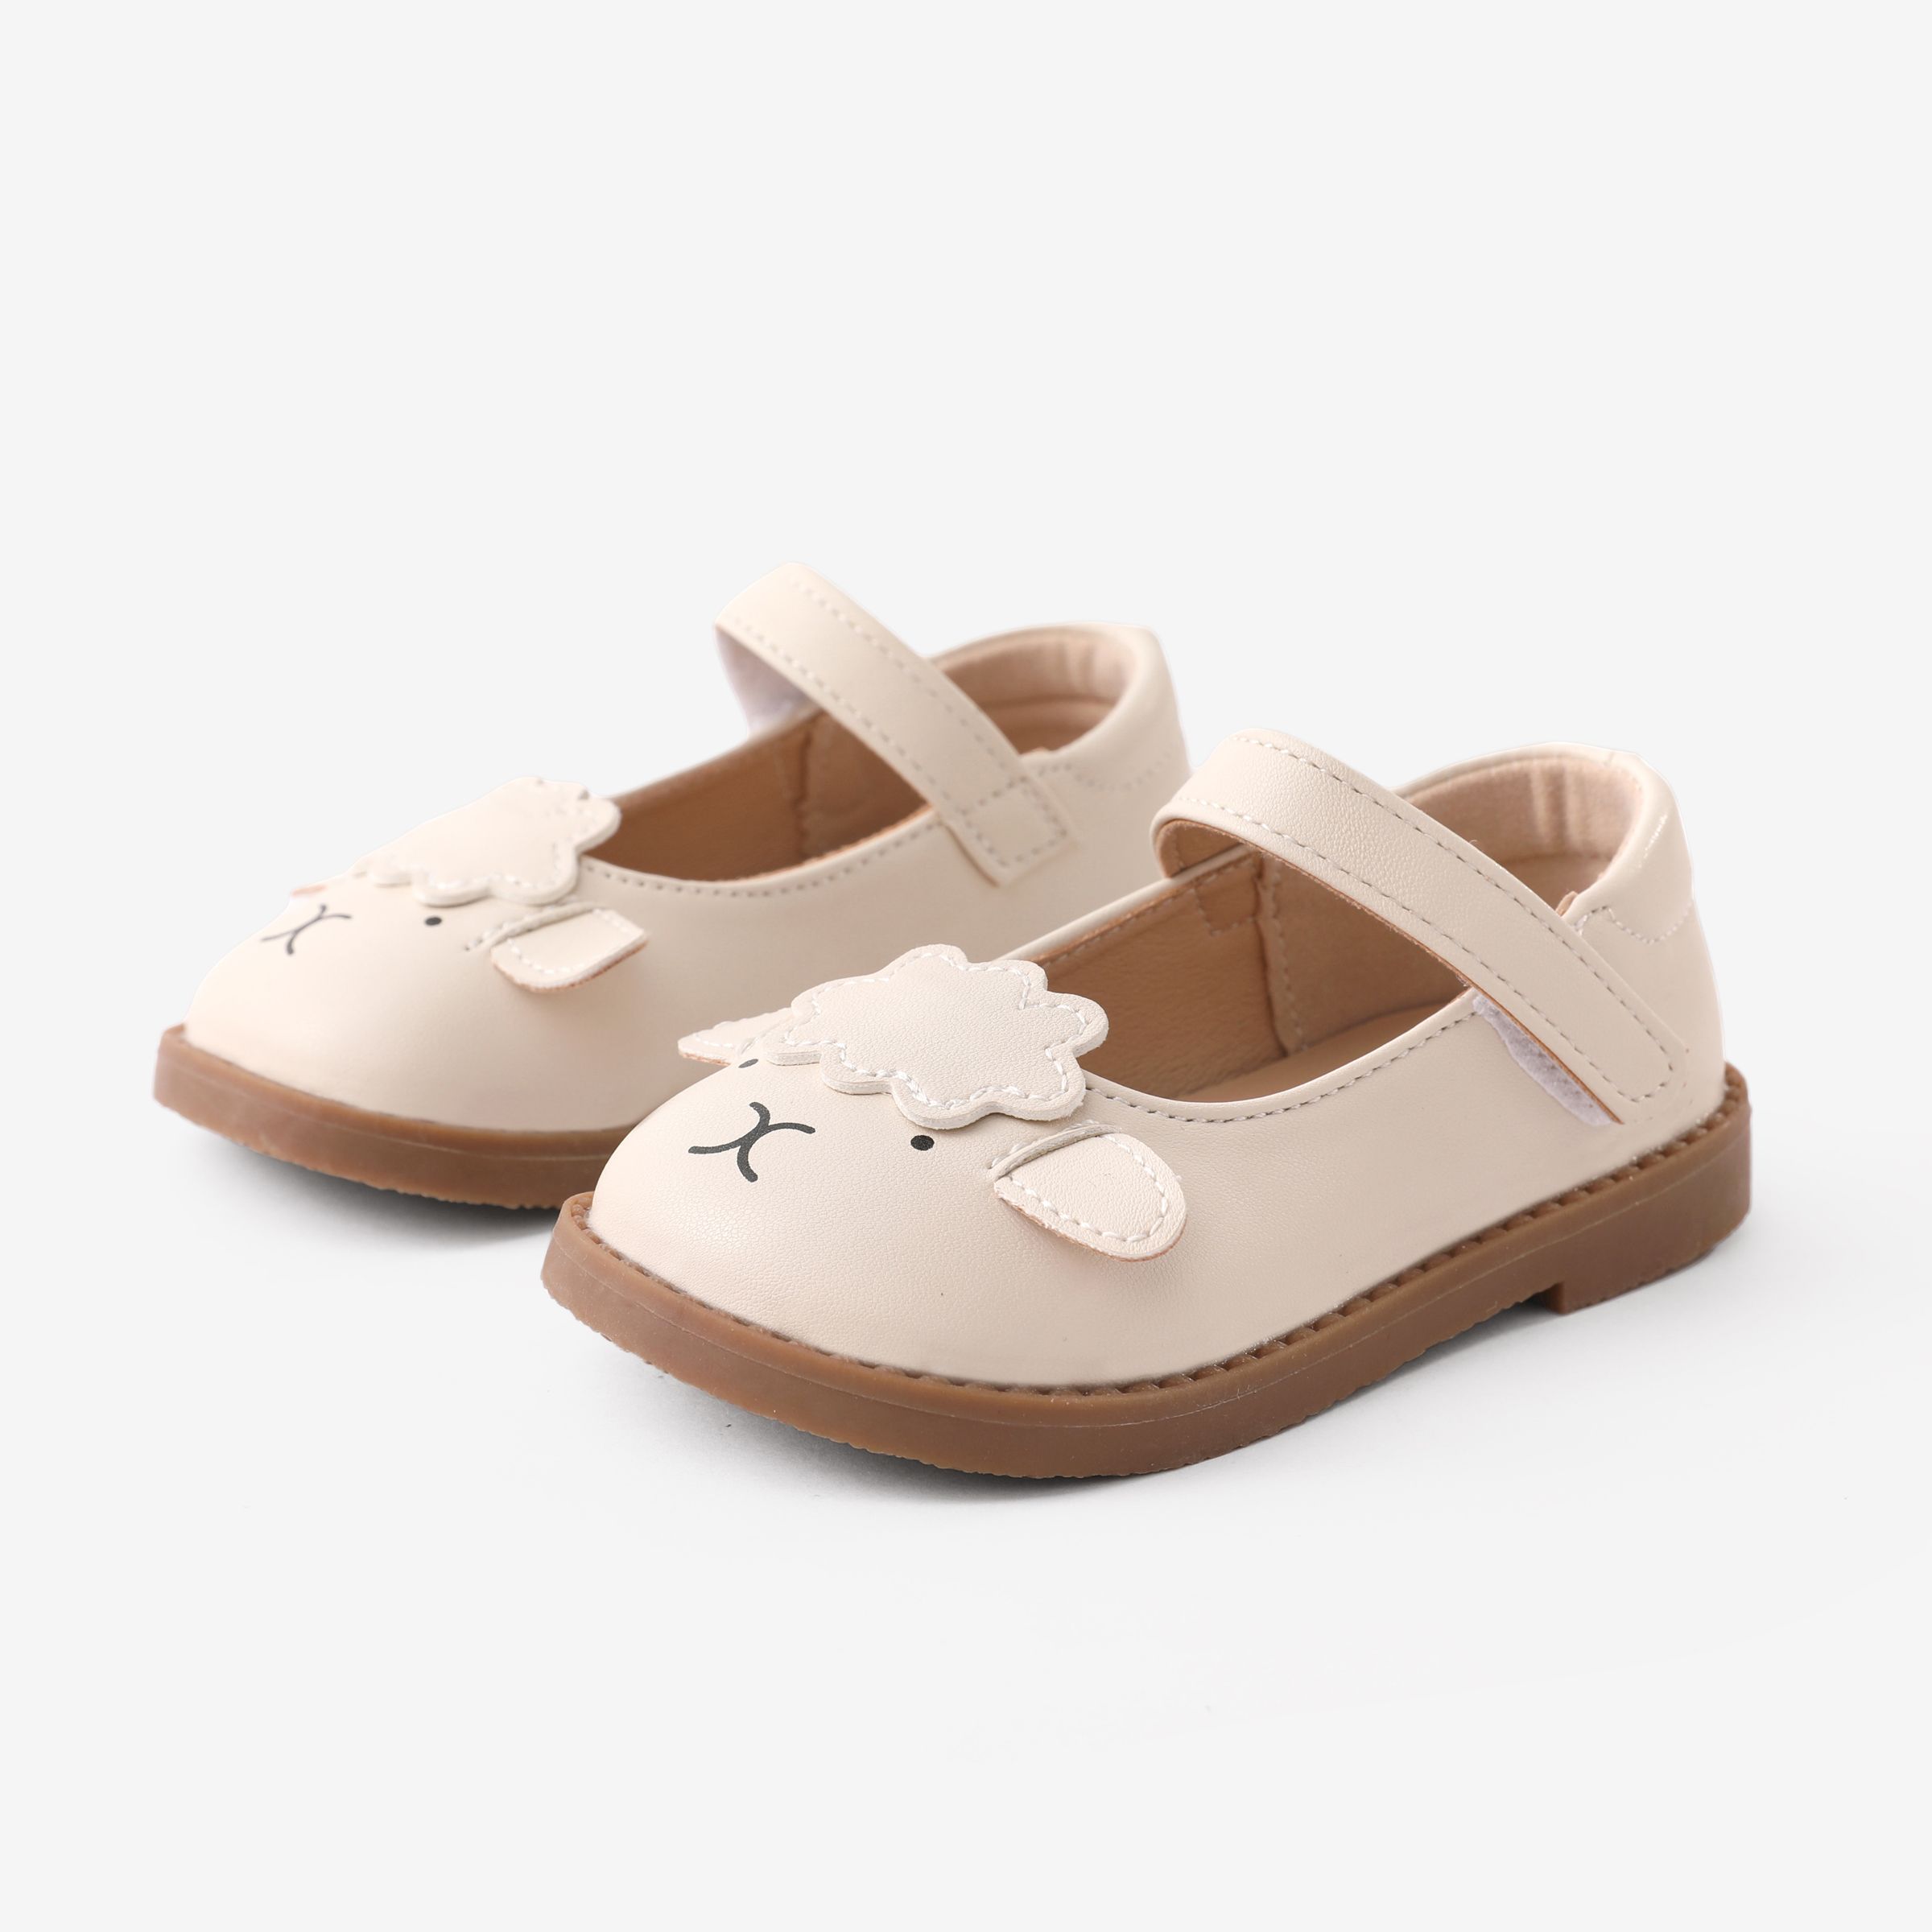 Toddler & Kids Girls' Childlike Sheep Pattern Velcro Leather Shoes